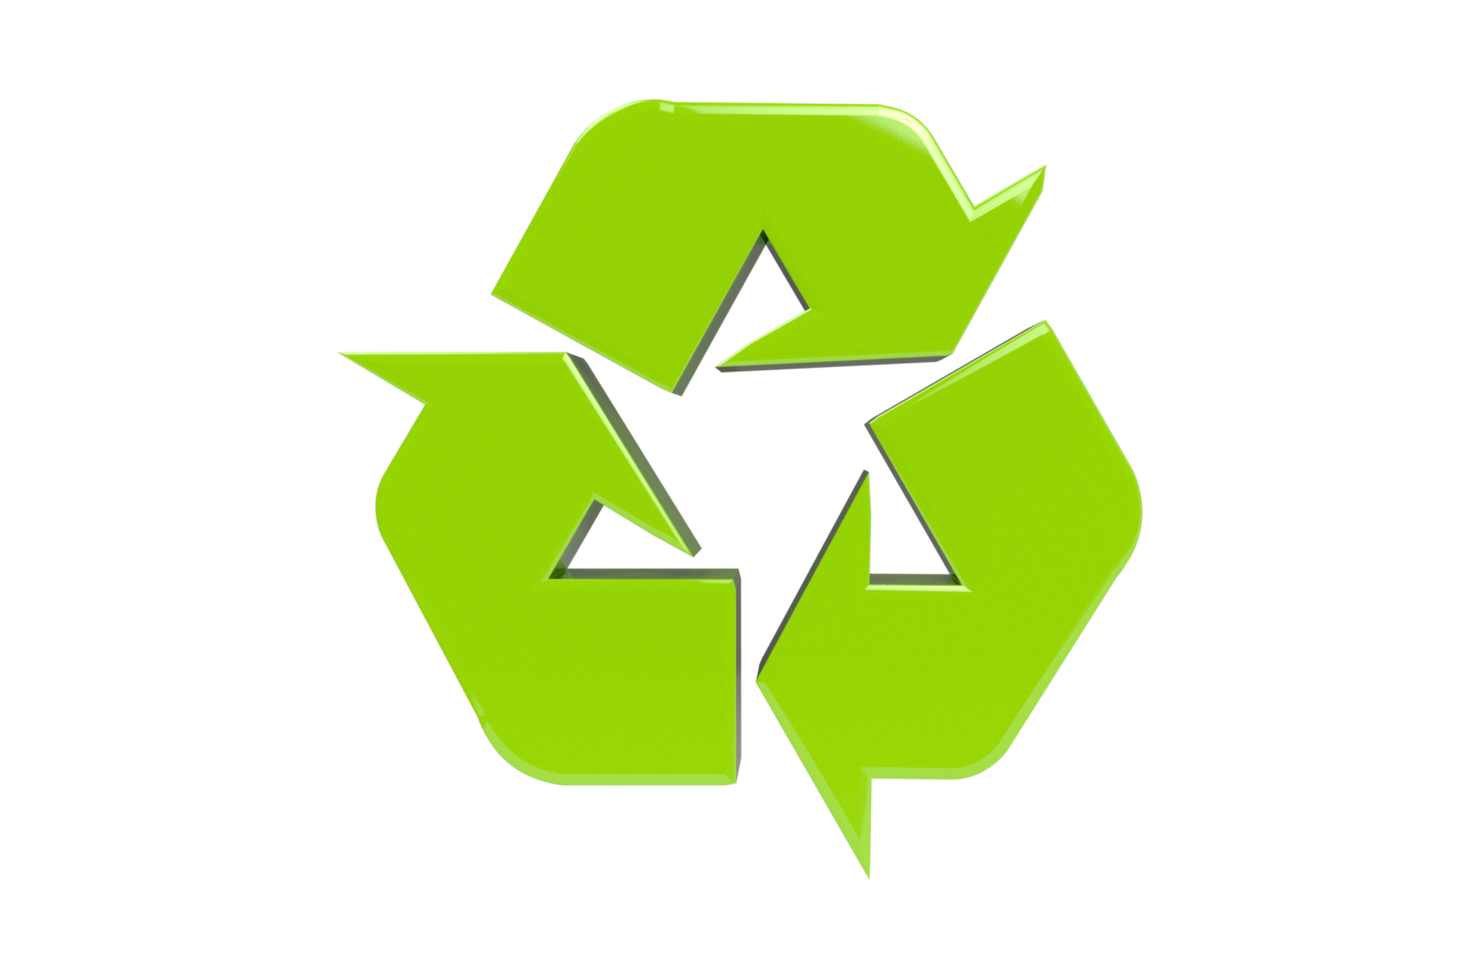 3d verde brillante símbolo de reciclaje png fondo transparente